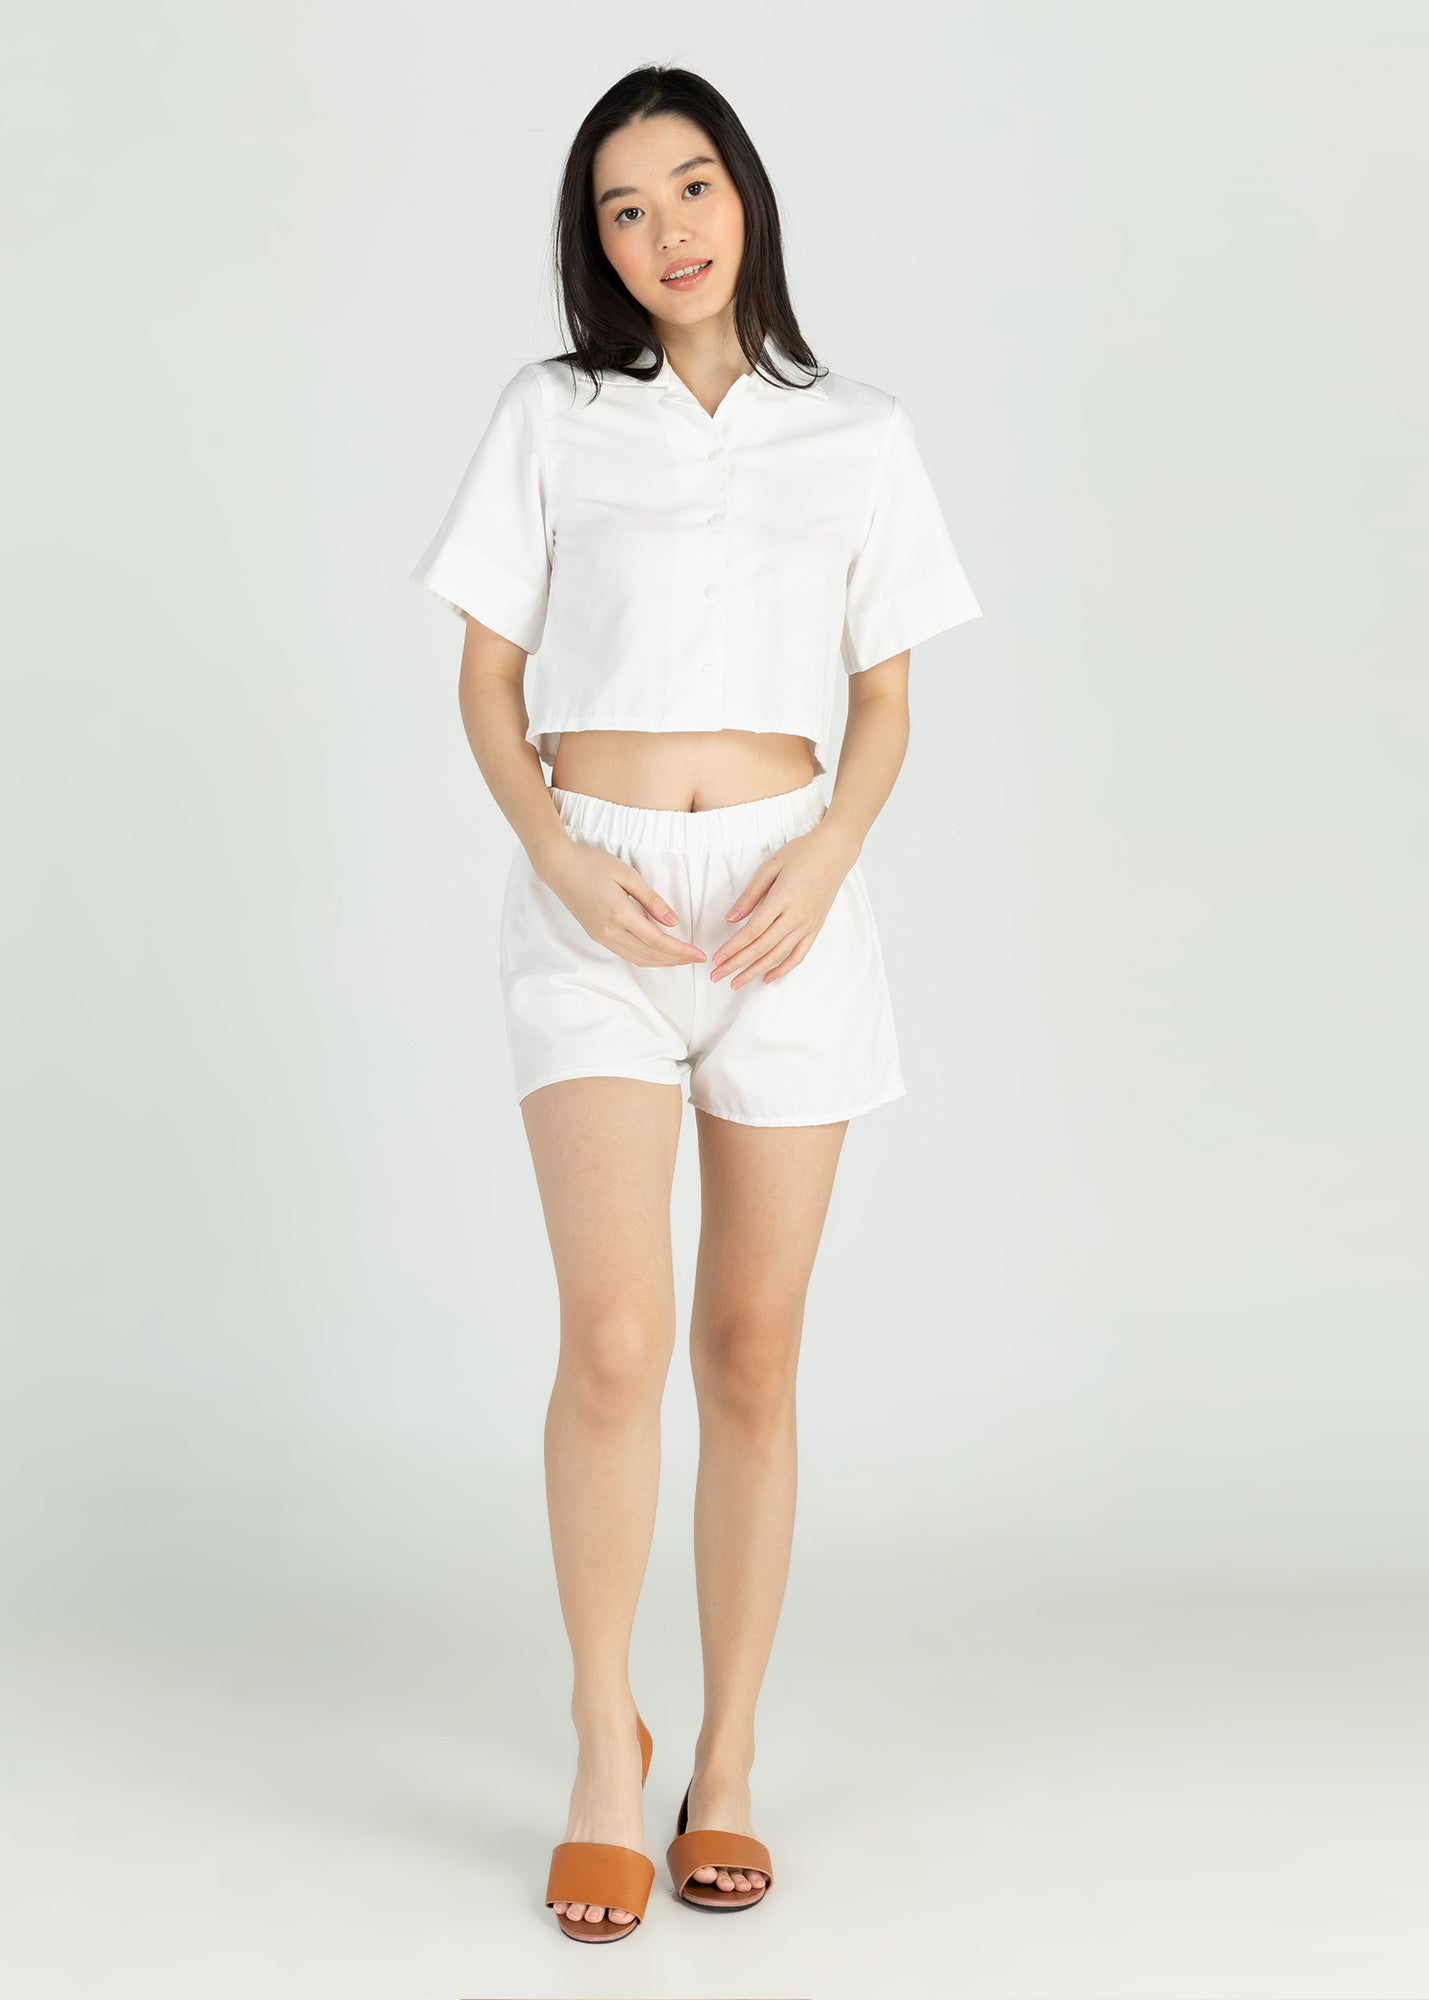 Casual Linen Shorts